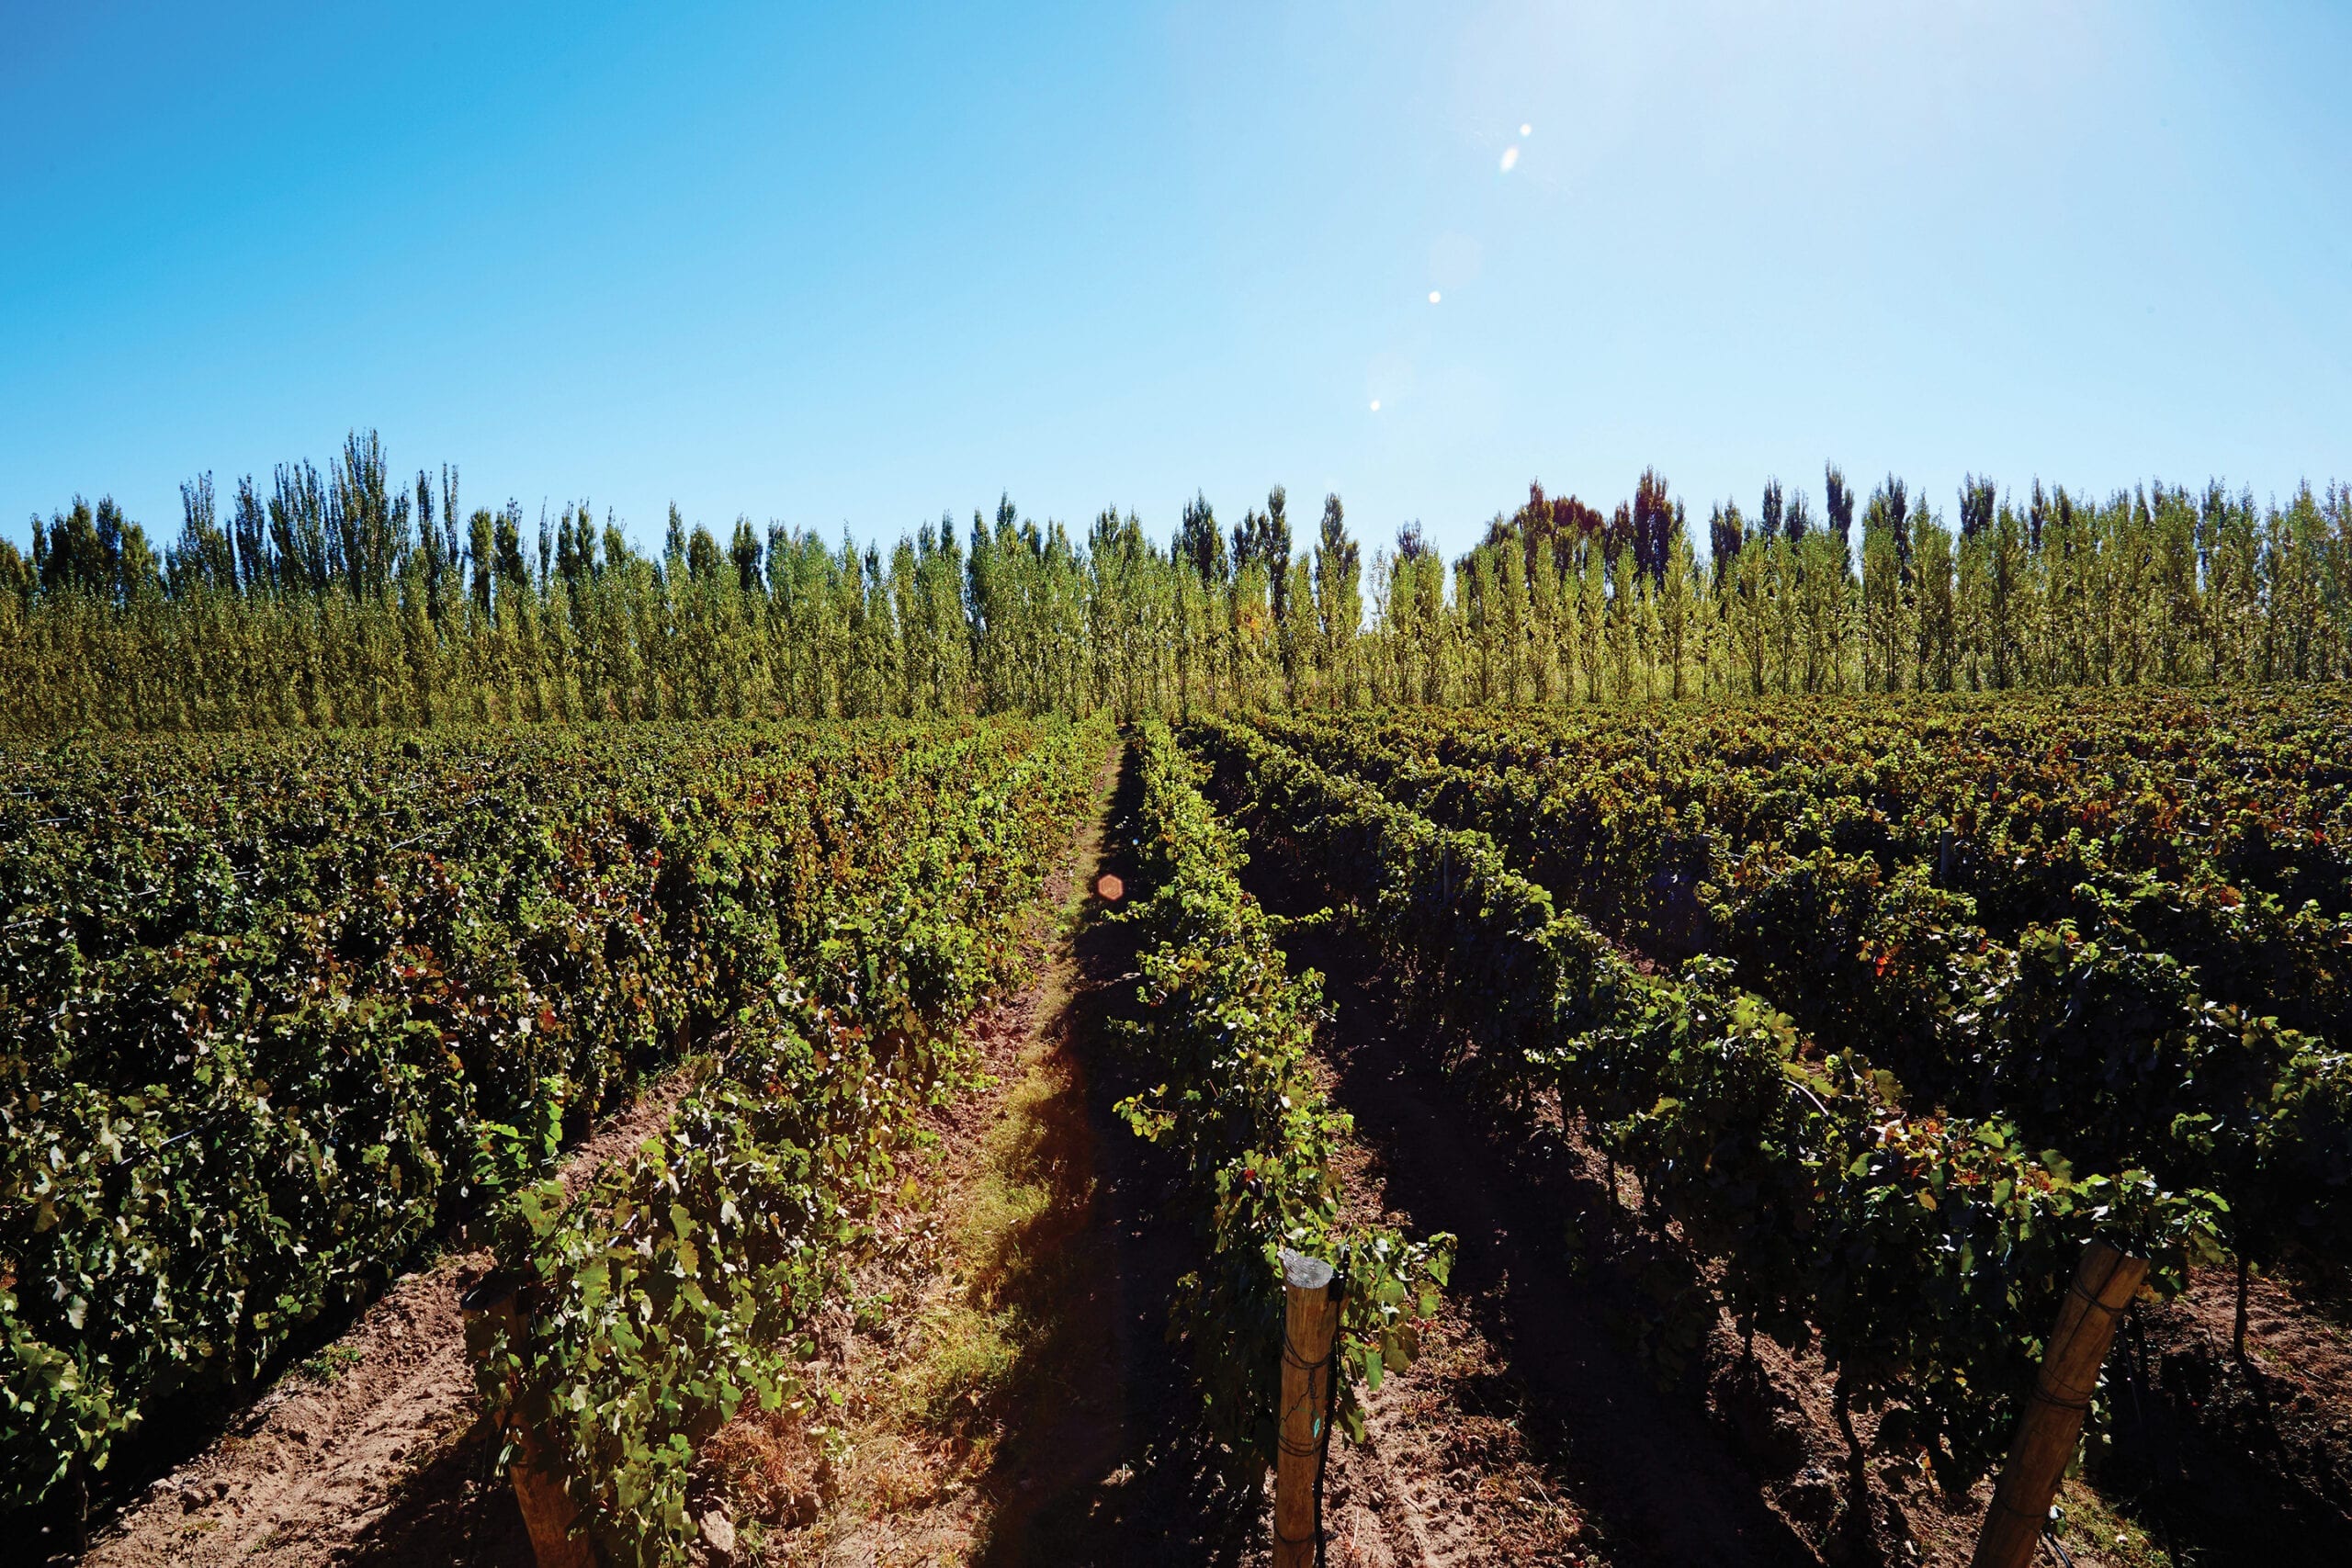 Chacra vineyards in Argentina